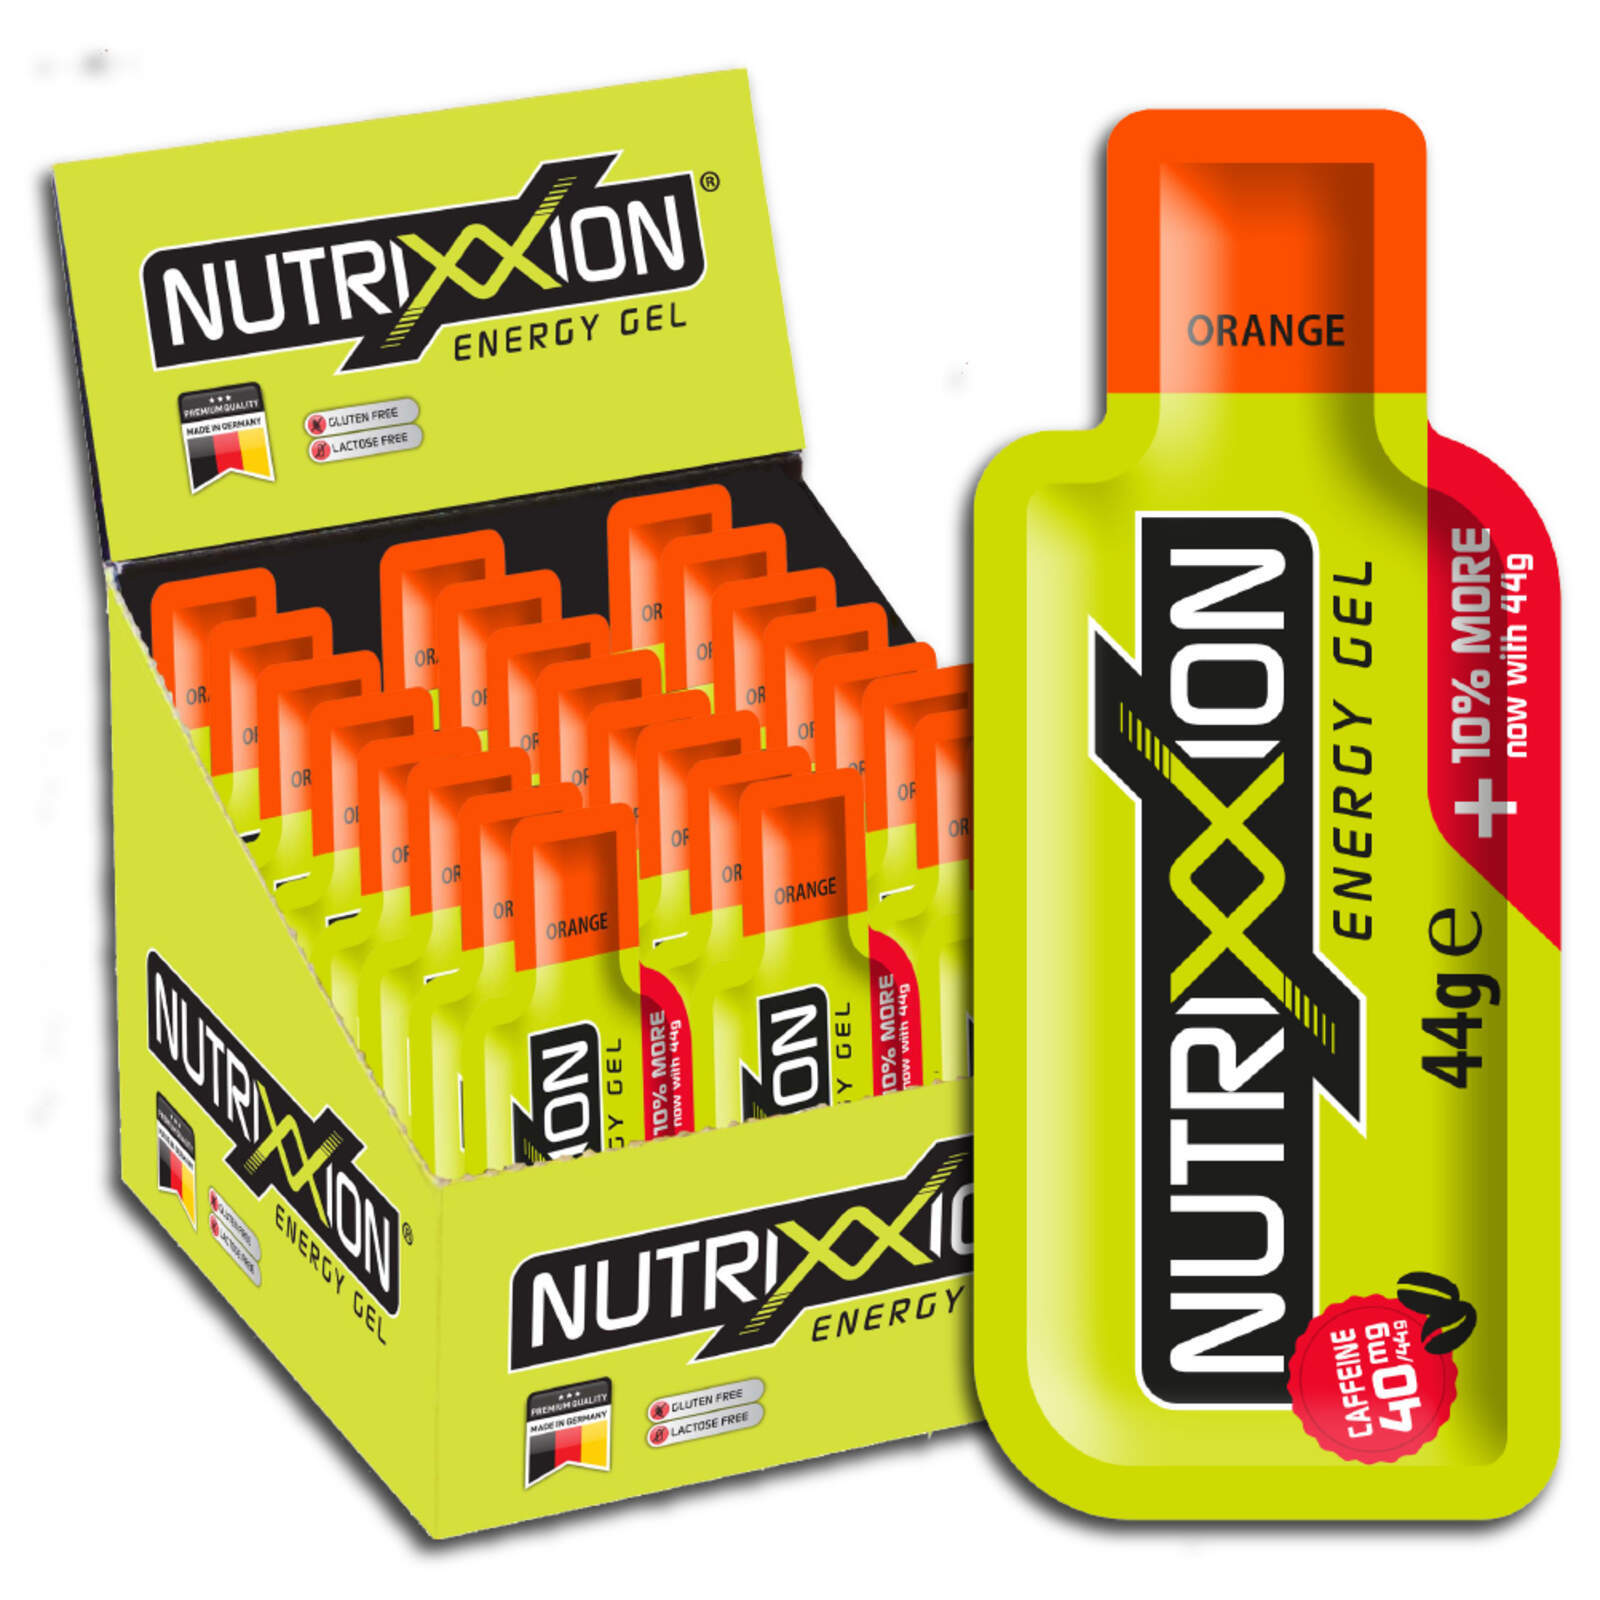 NUTRIXXION Energy Gel 24 x 44g
Orange